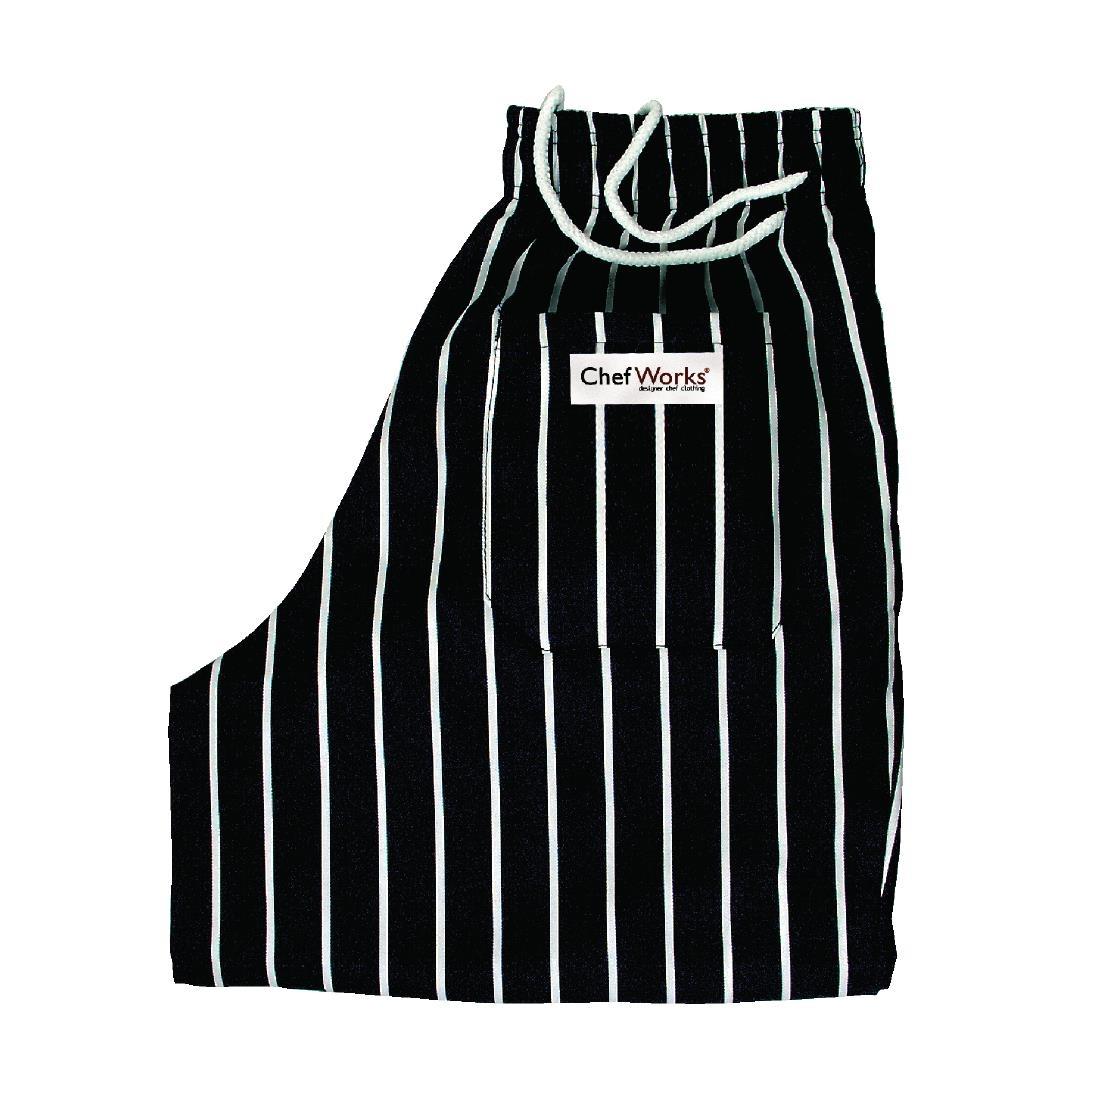 Chef Works Designer Baggy Pant Chalk Stripe 3XL - A940-3XL  - 2